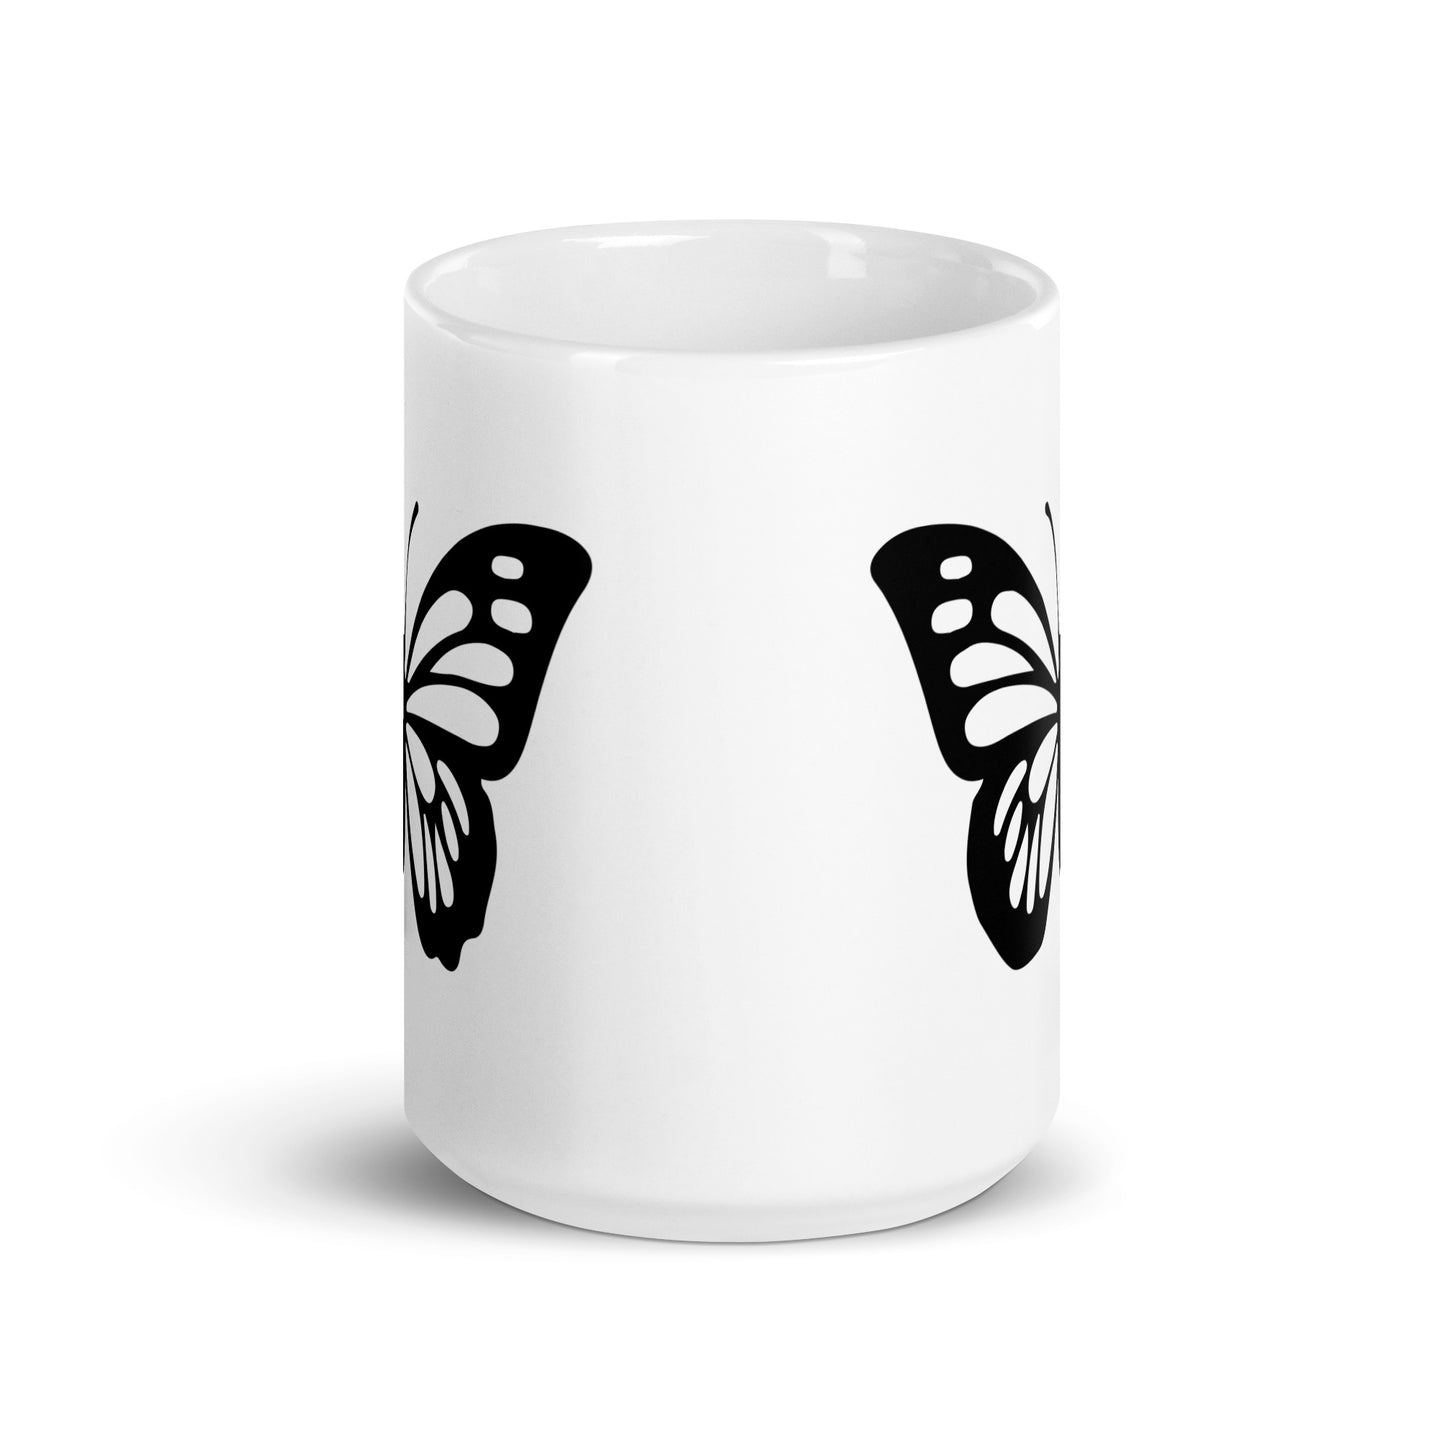 Positivity Butterfly White Ceramic Coffee Mug